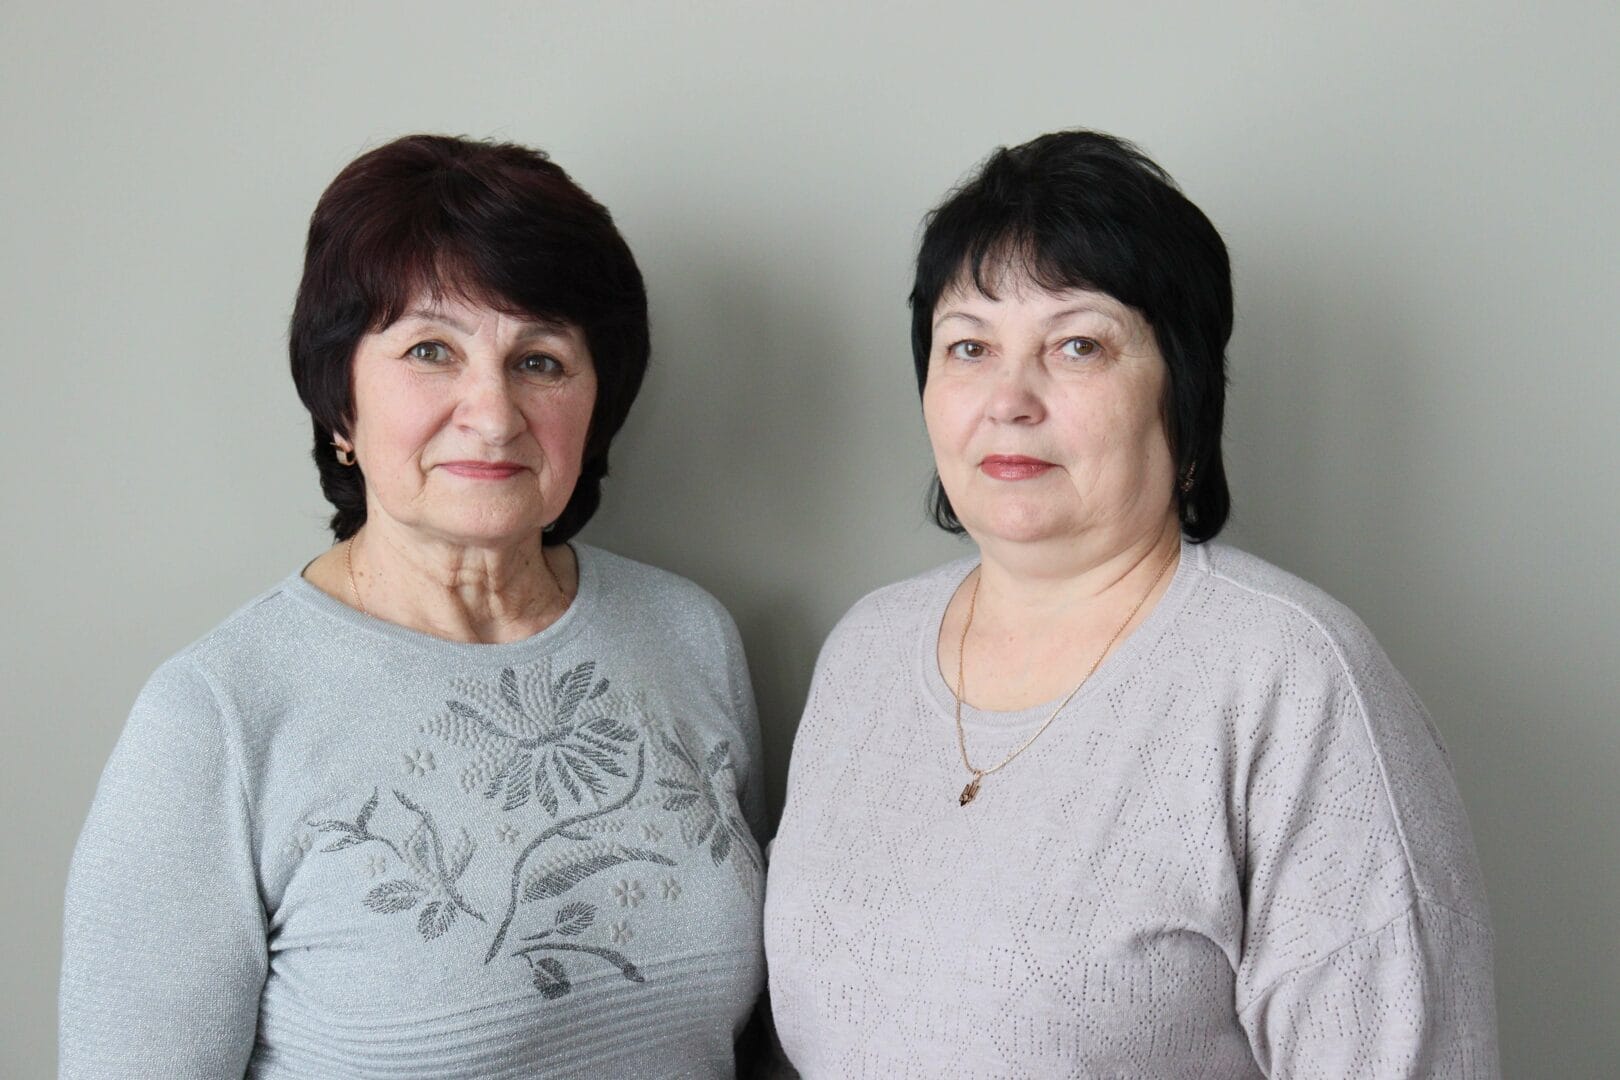 Starostas of the Starosta-headed districts:  Hanna Kabanova and Liudmyla Krupska